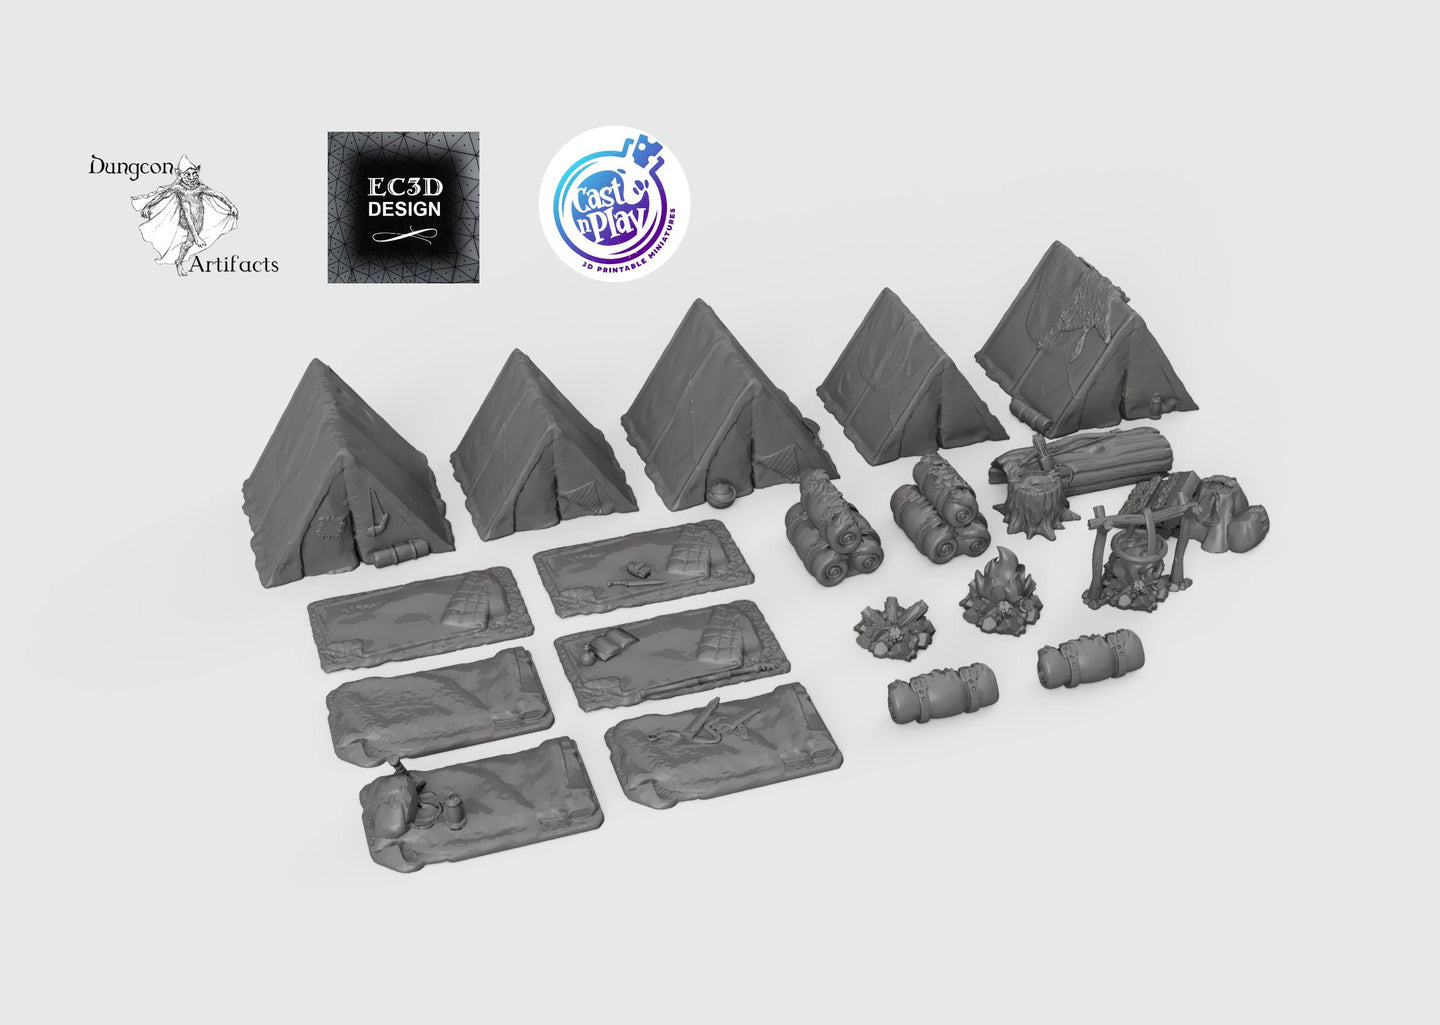 Ultimate RPG Camp Set - Terrain Wargaming Tabletop Scatter Miniatures Terrain D&D, DnD